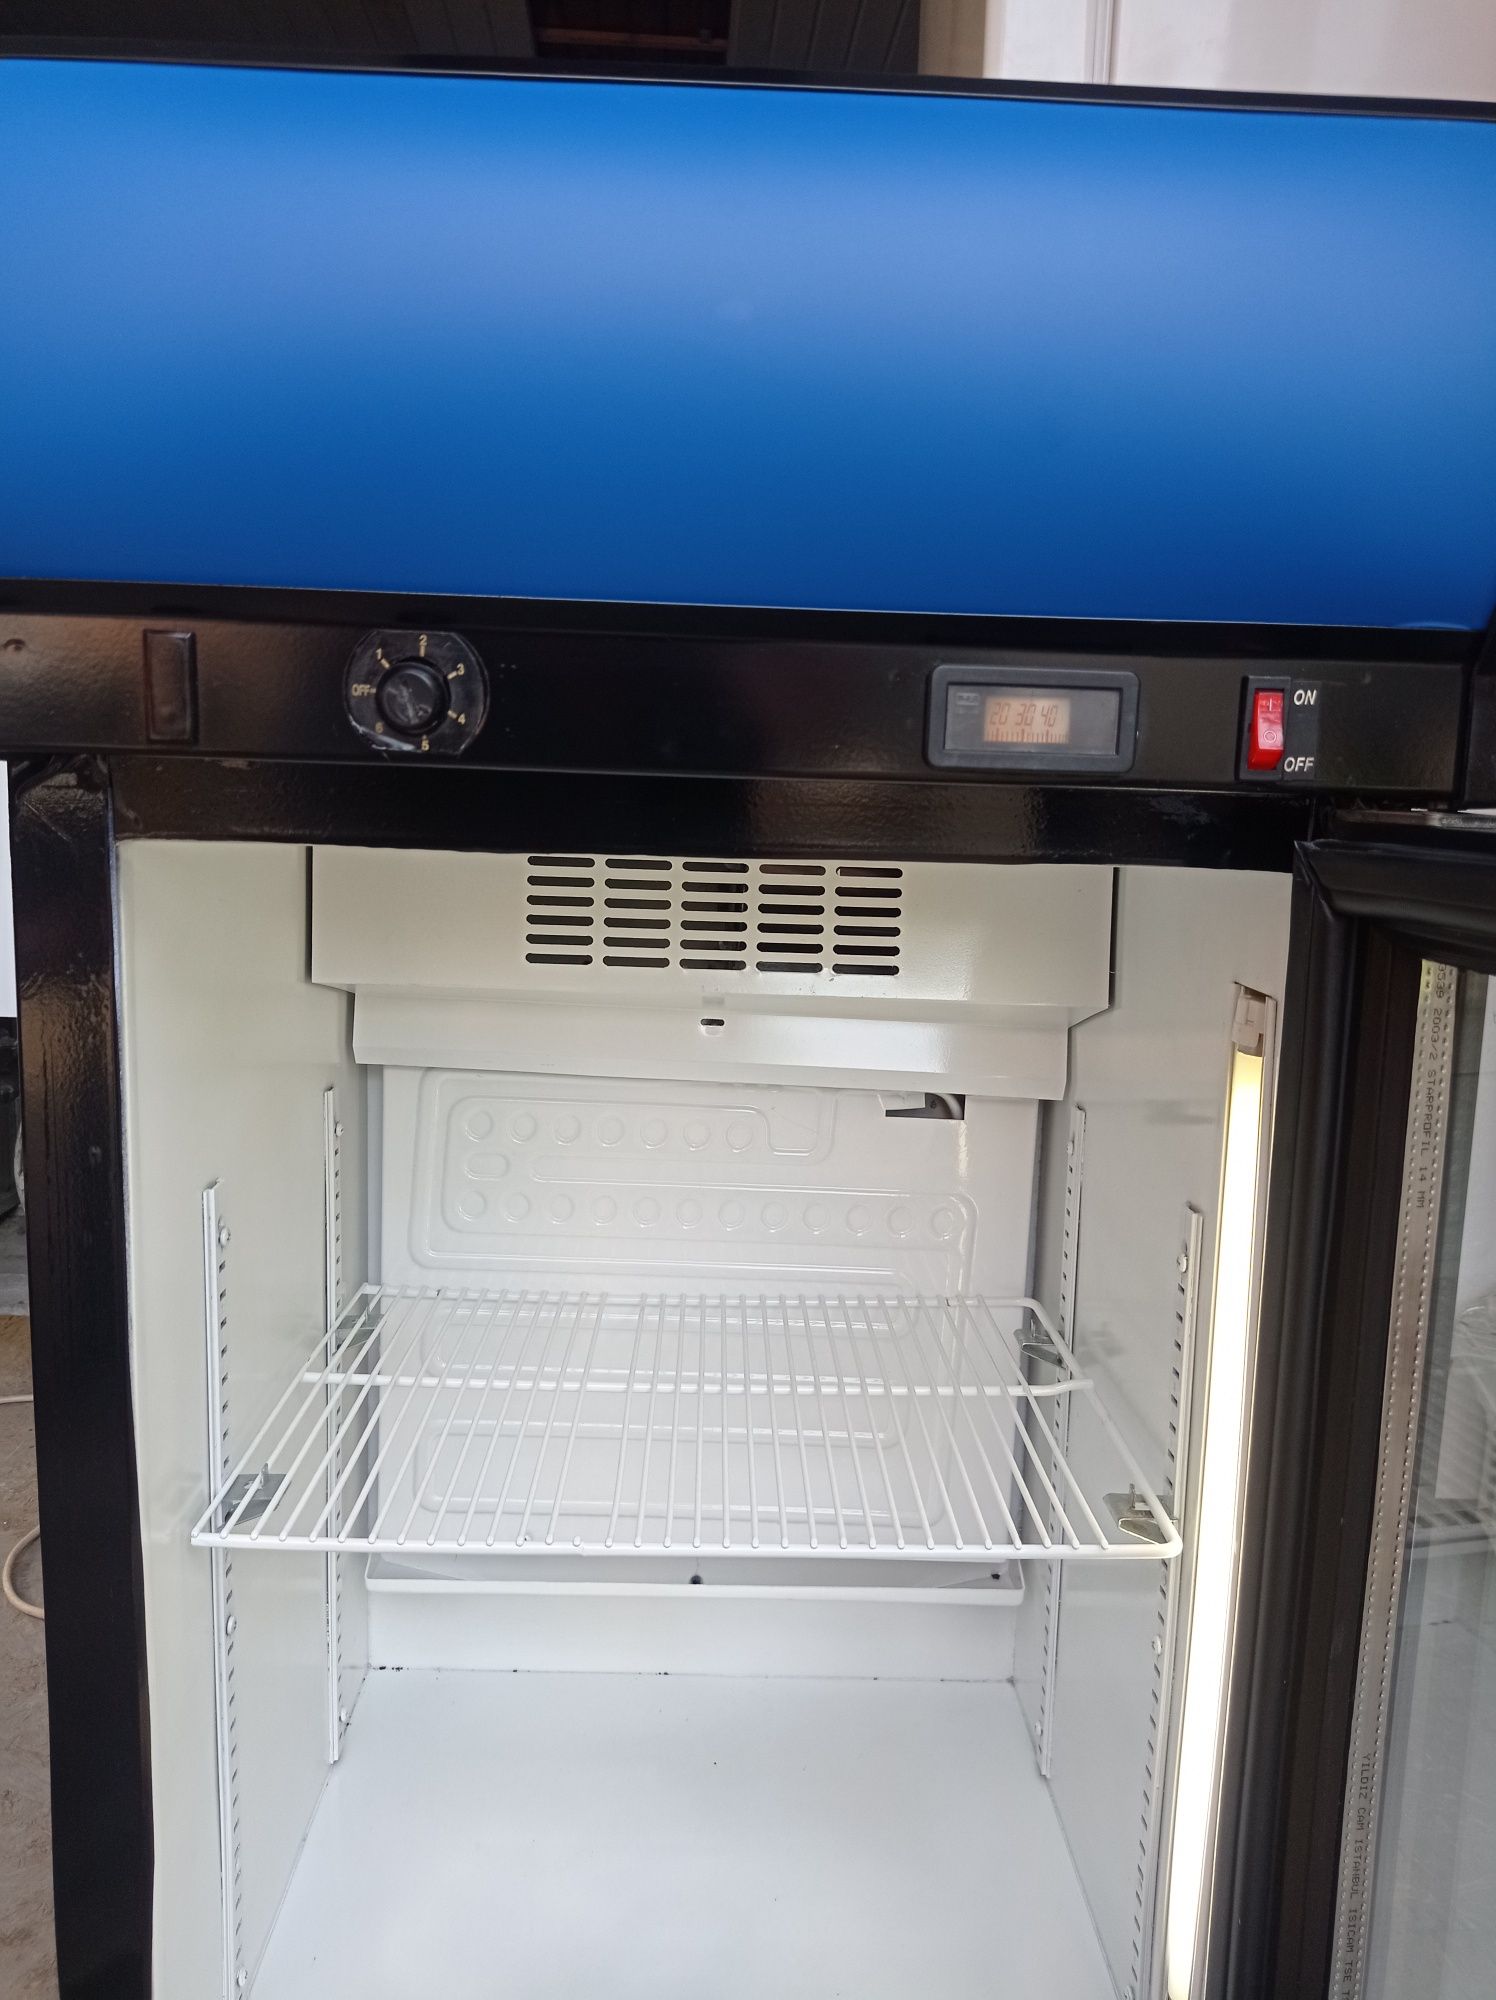 Холодильник Климассан Турция 90 см